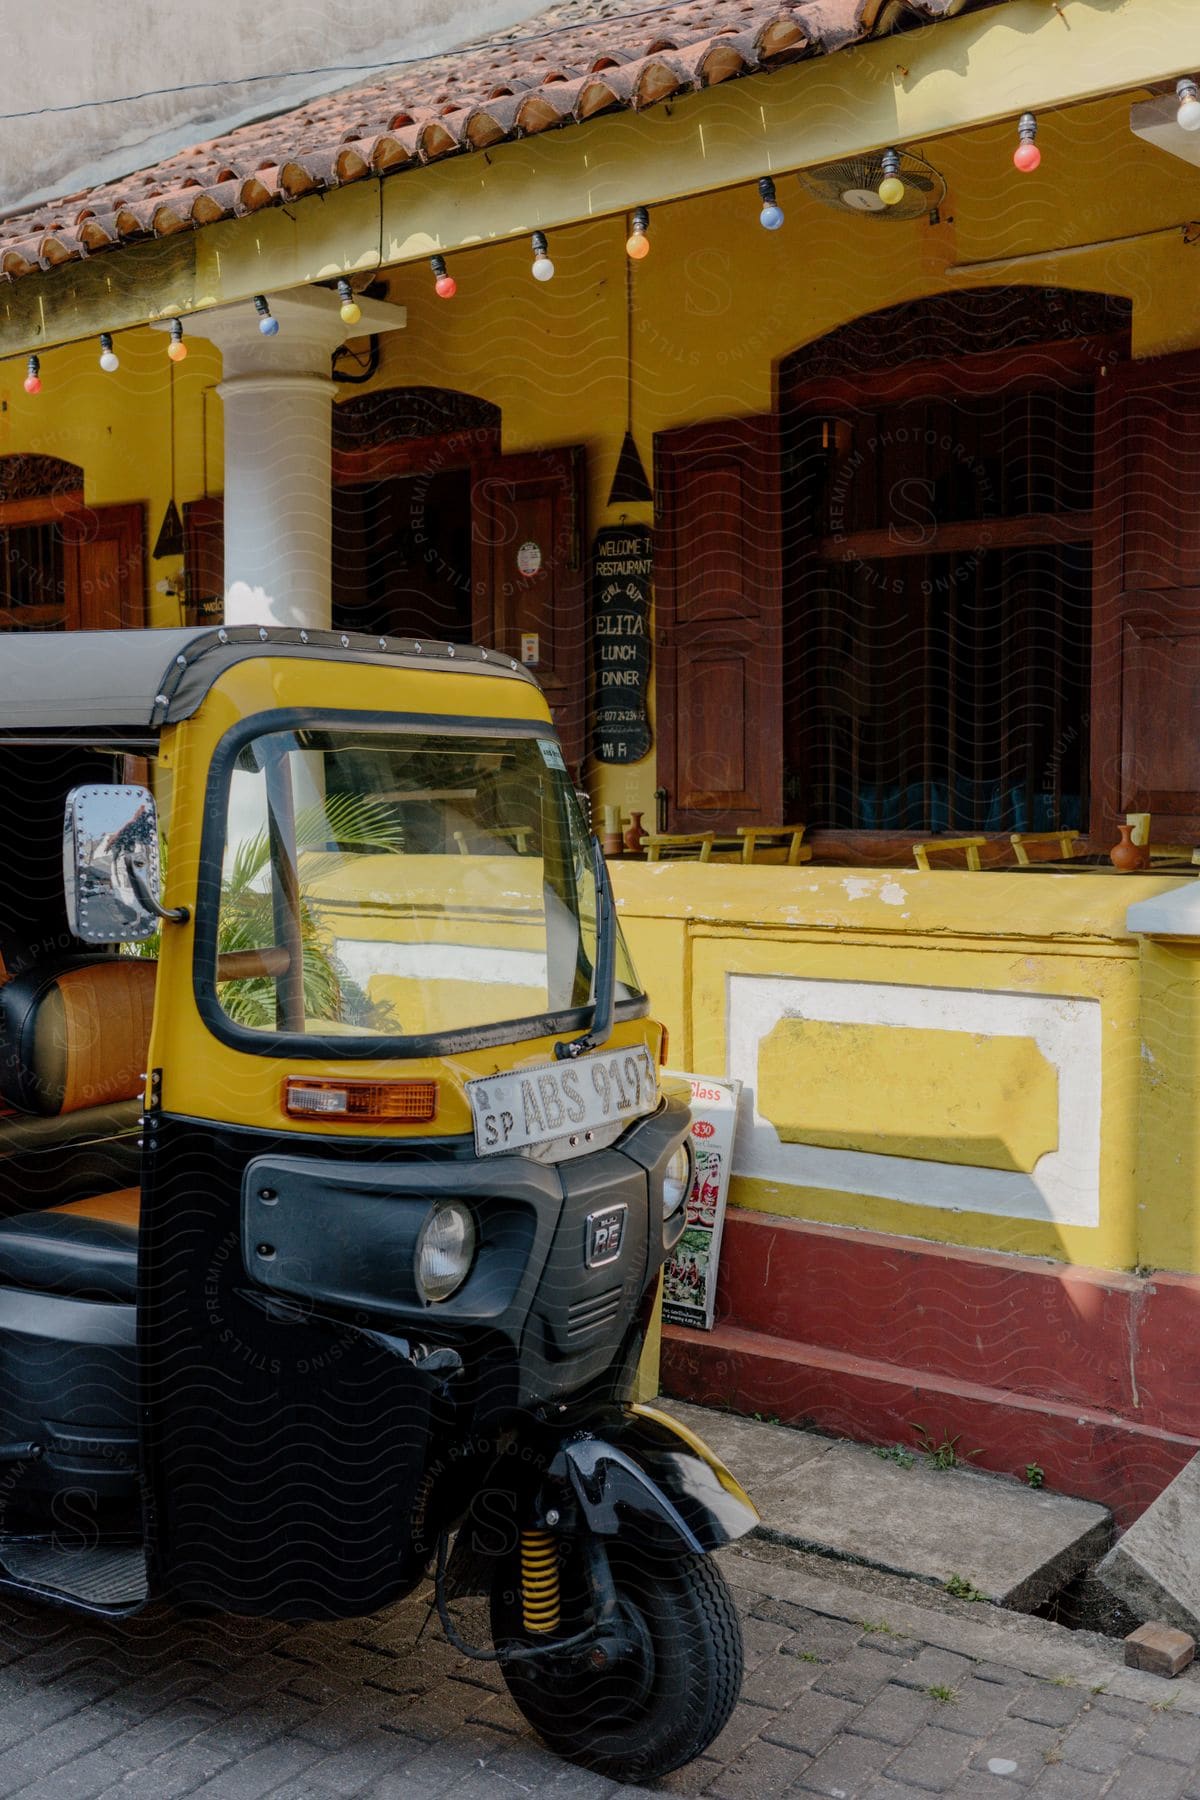 Three wheeled tuk tuk motor vehicle sits parked near restaurant balcony seating.